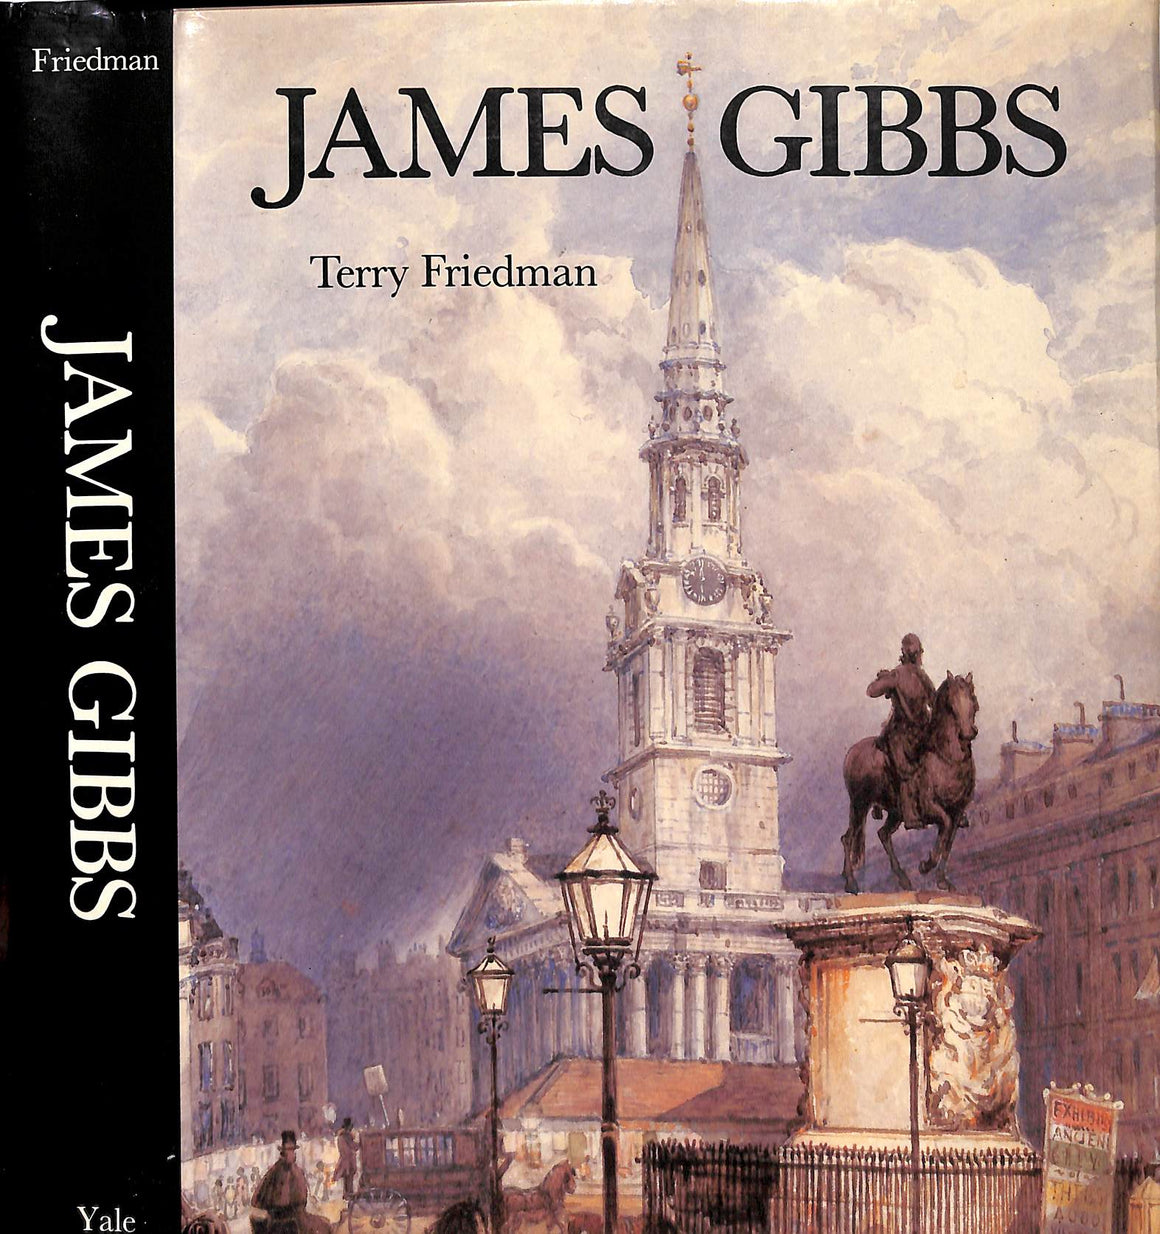 "James Gibbs" 1984 FRIEDMAN, Terry